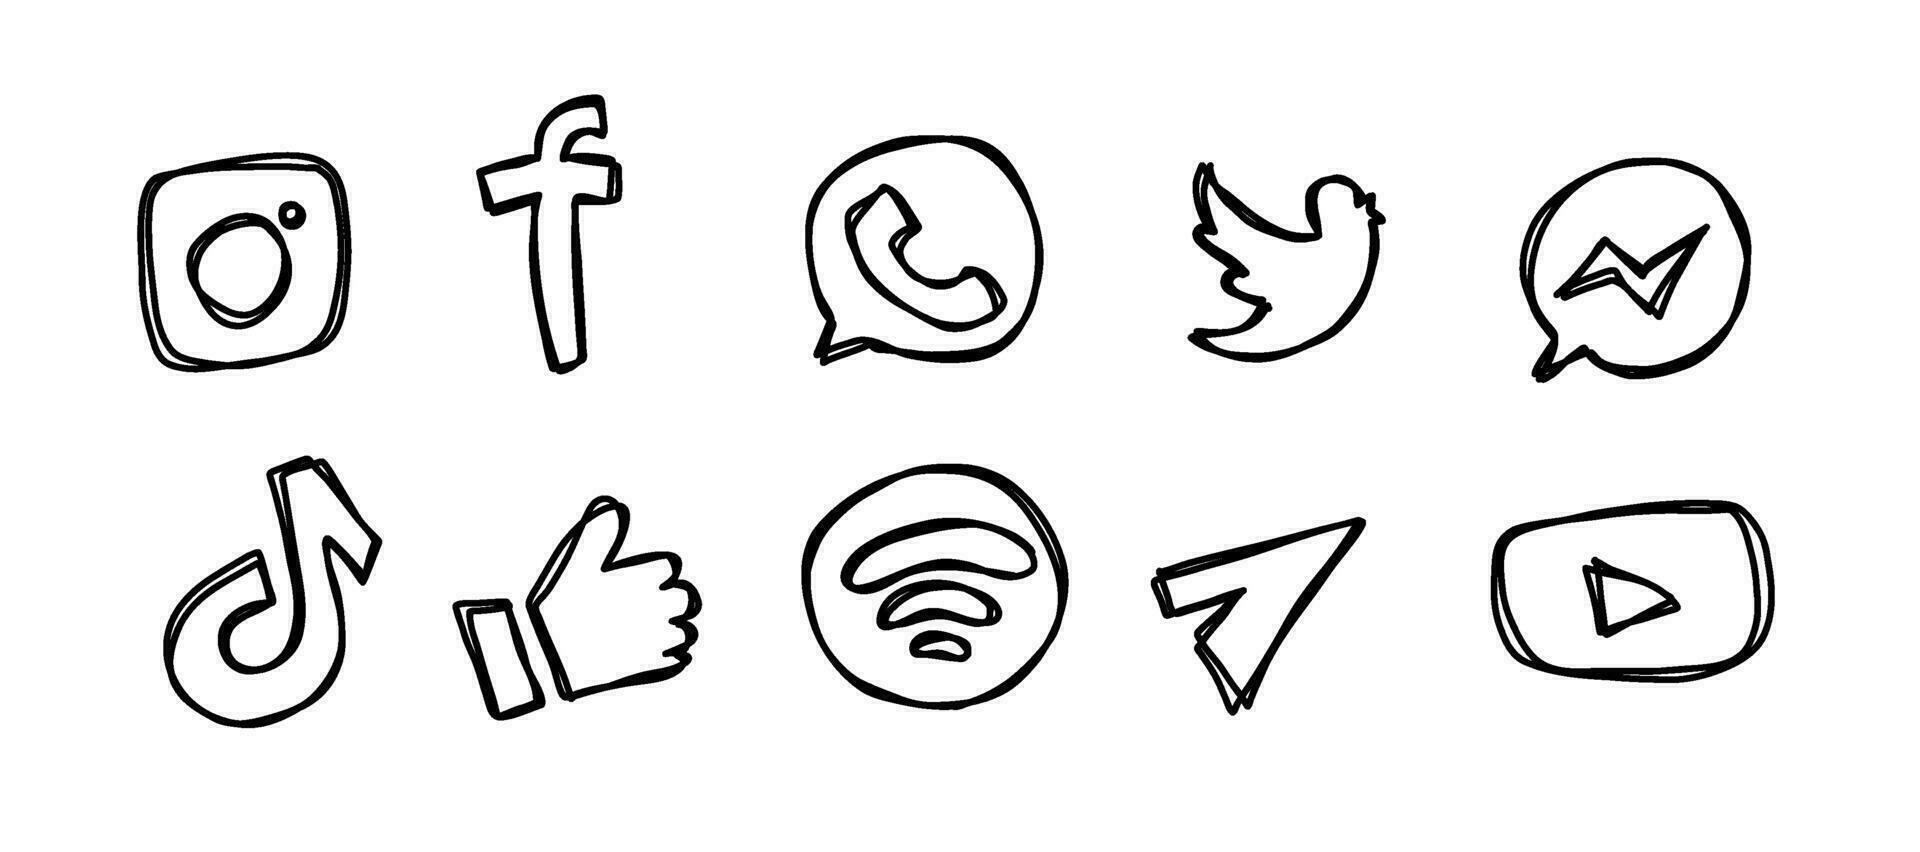 Social media icons on white background. logo Instagram, youtube, Spotify, telegram, facebook, twitter, tiktoc, what's app icons doodle style. vector